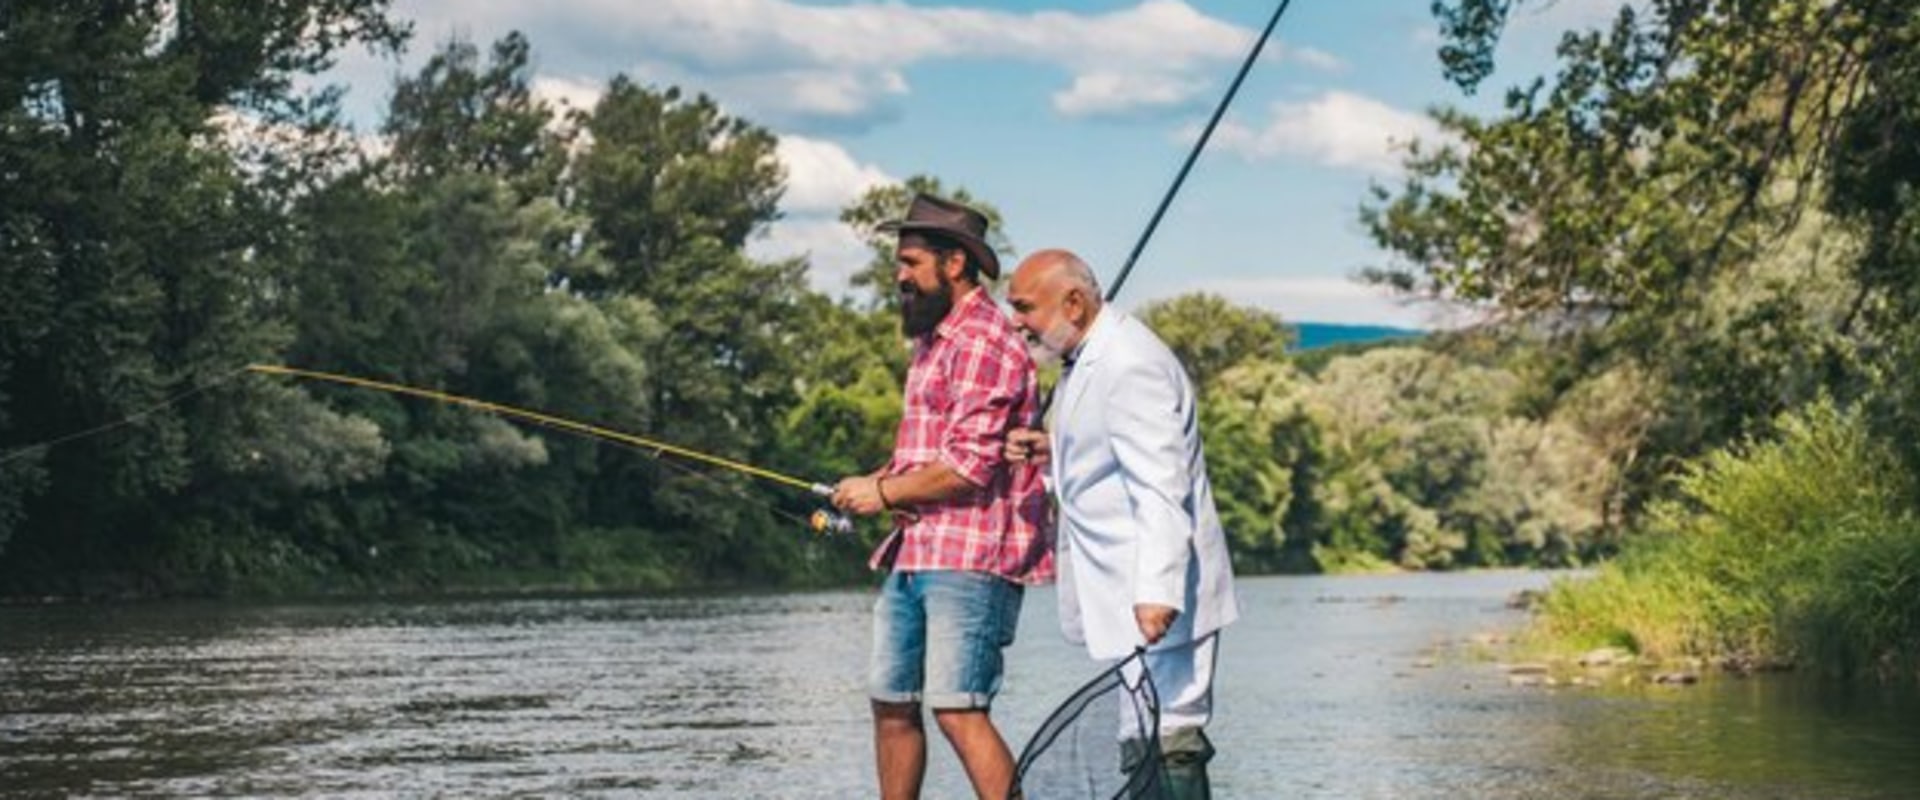 Is fishing a fun hobby?